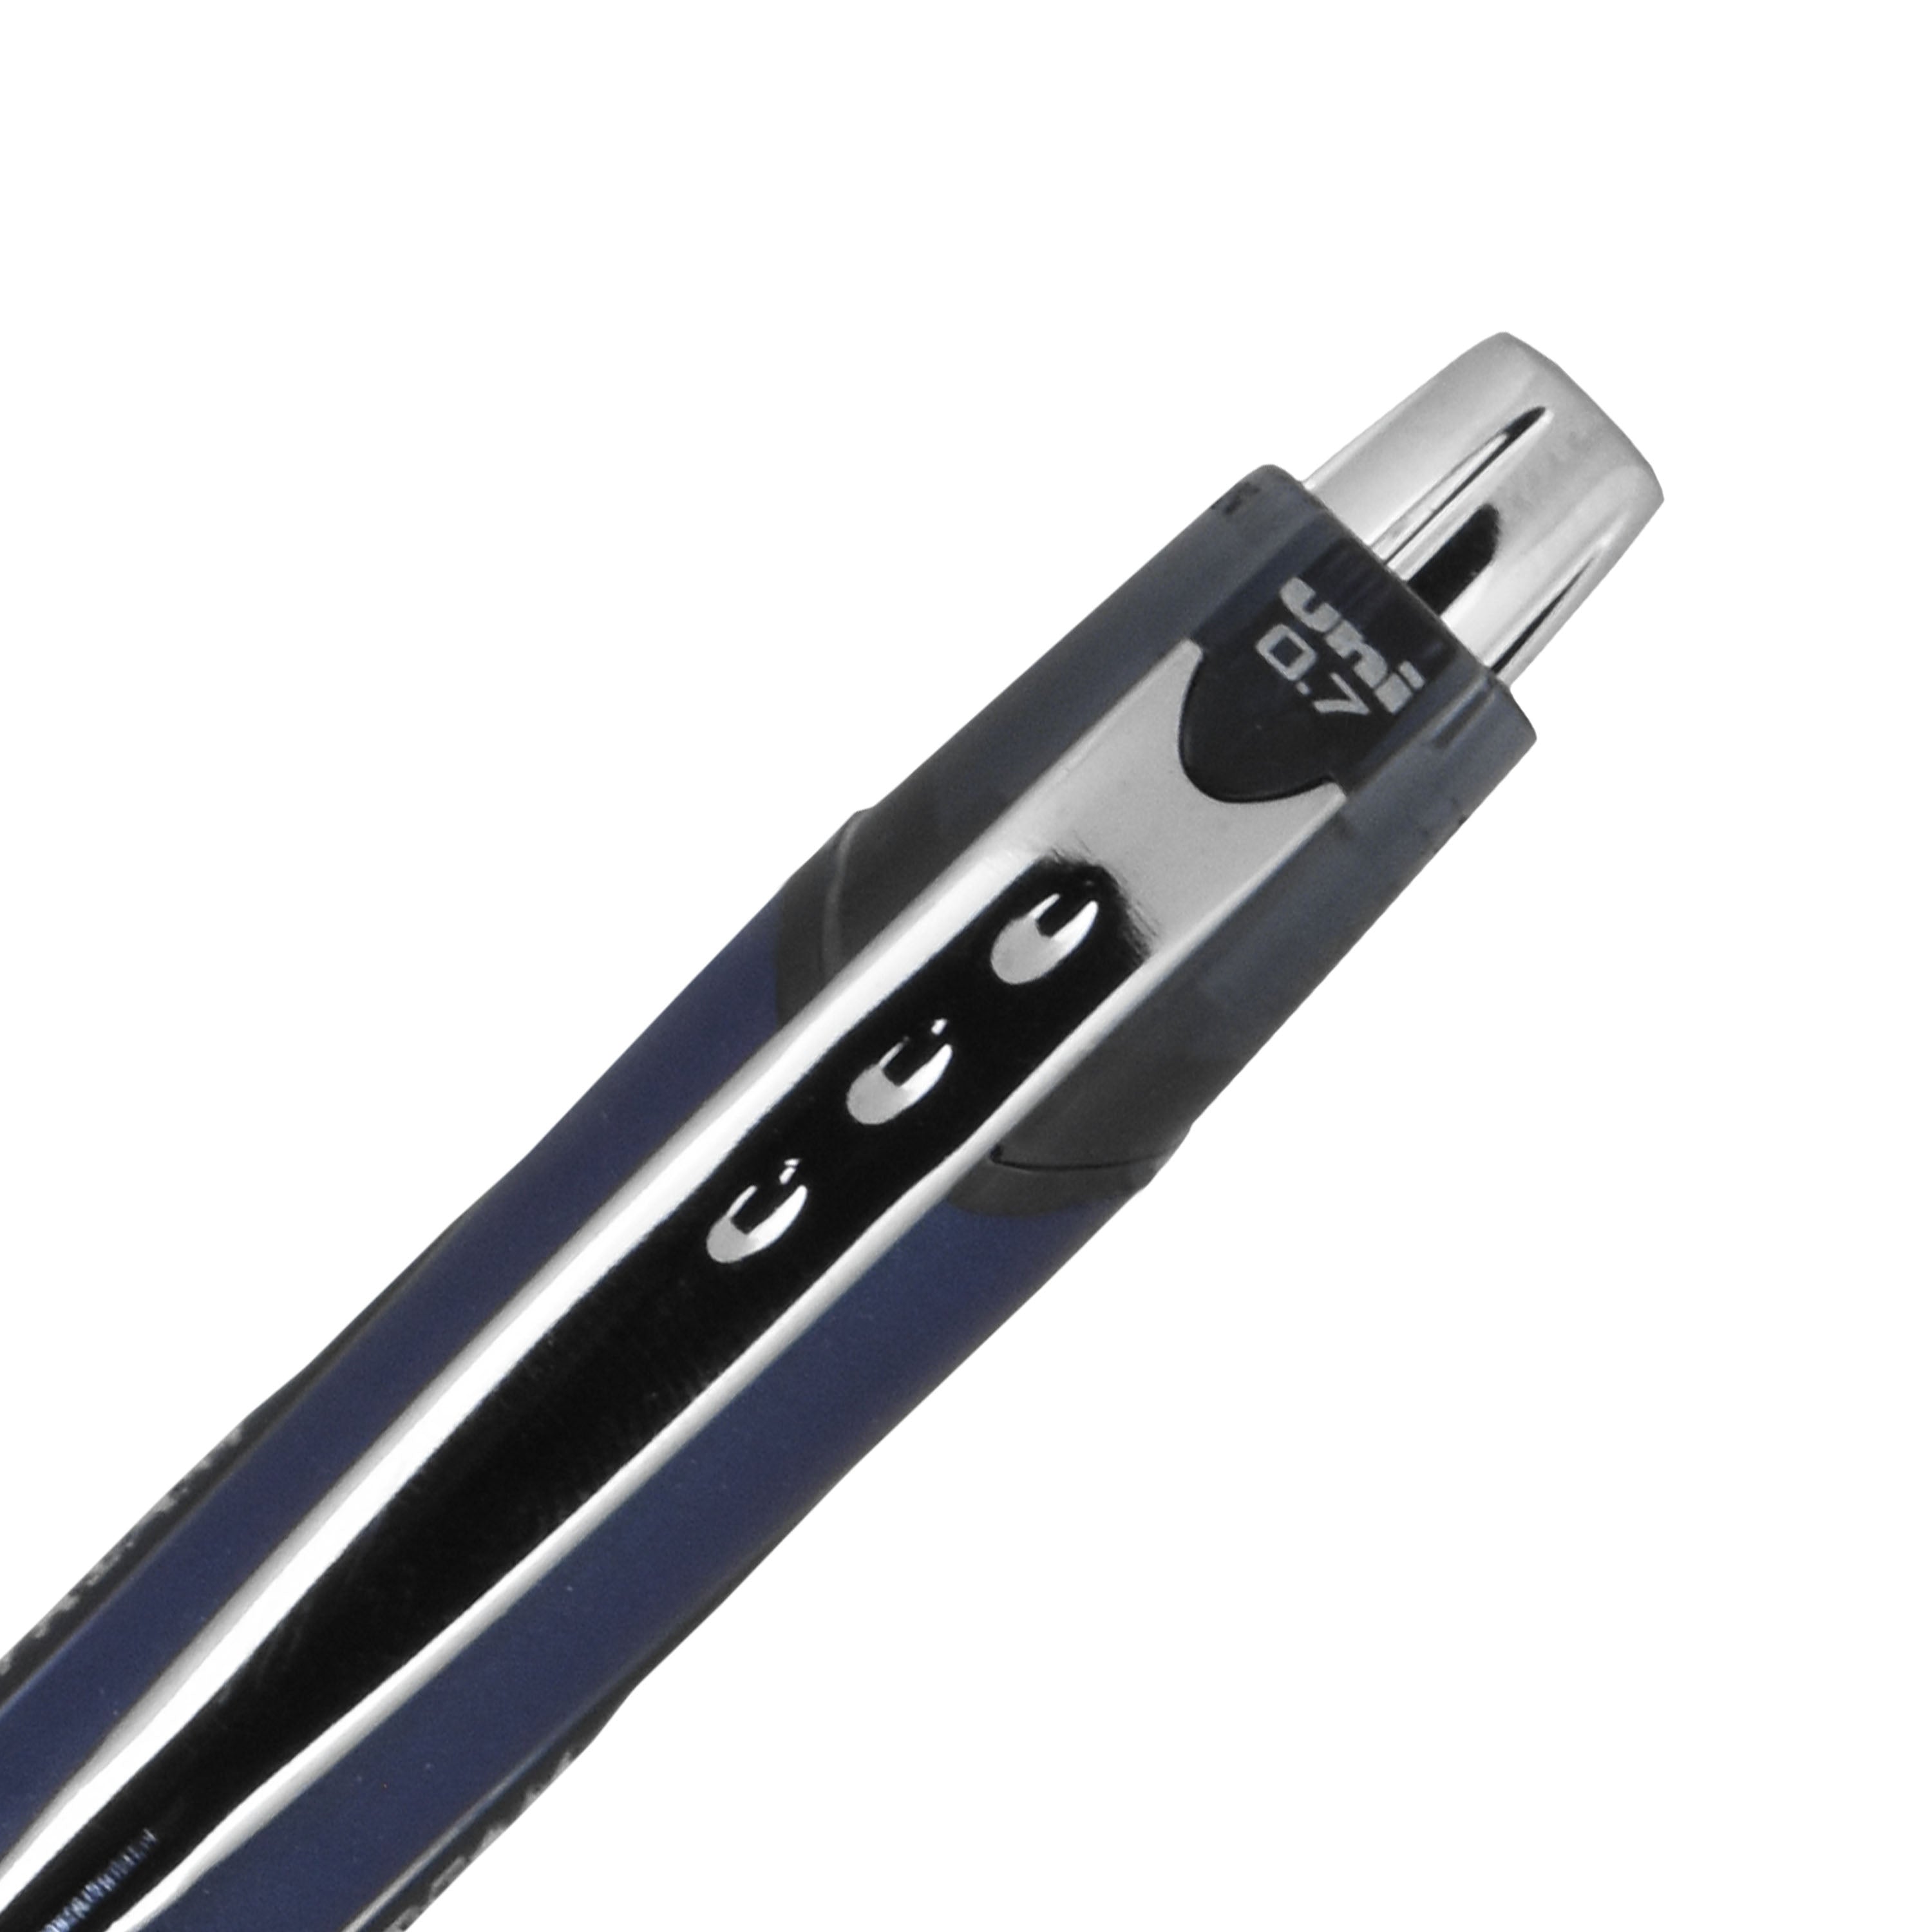 uniball™ Jetstream RT Ballpoint Pens, Fine Point (0.7mm), Assorted Colors, 3 Pack